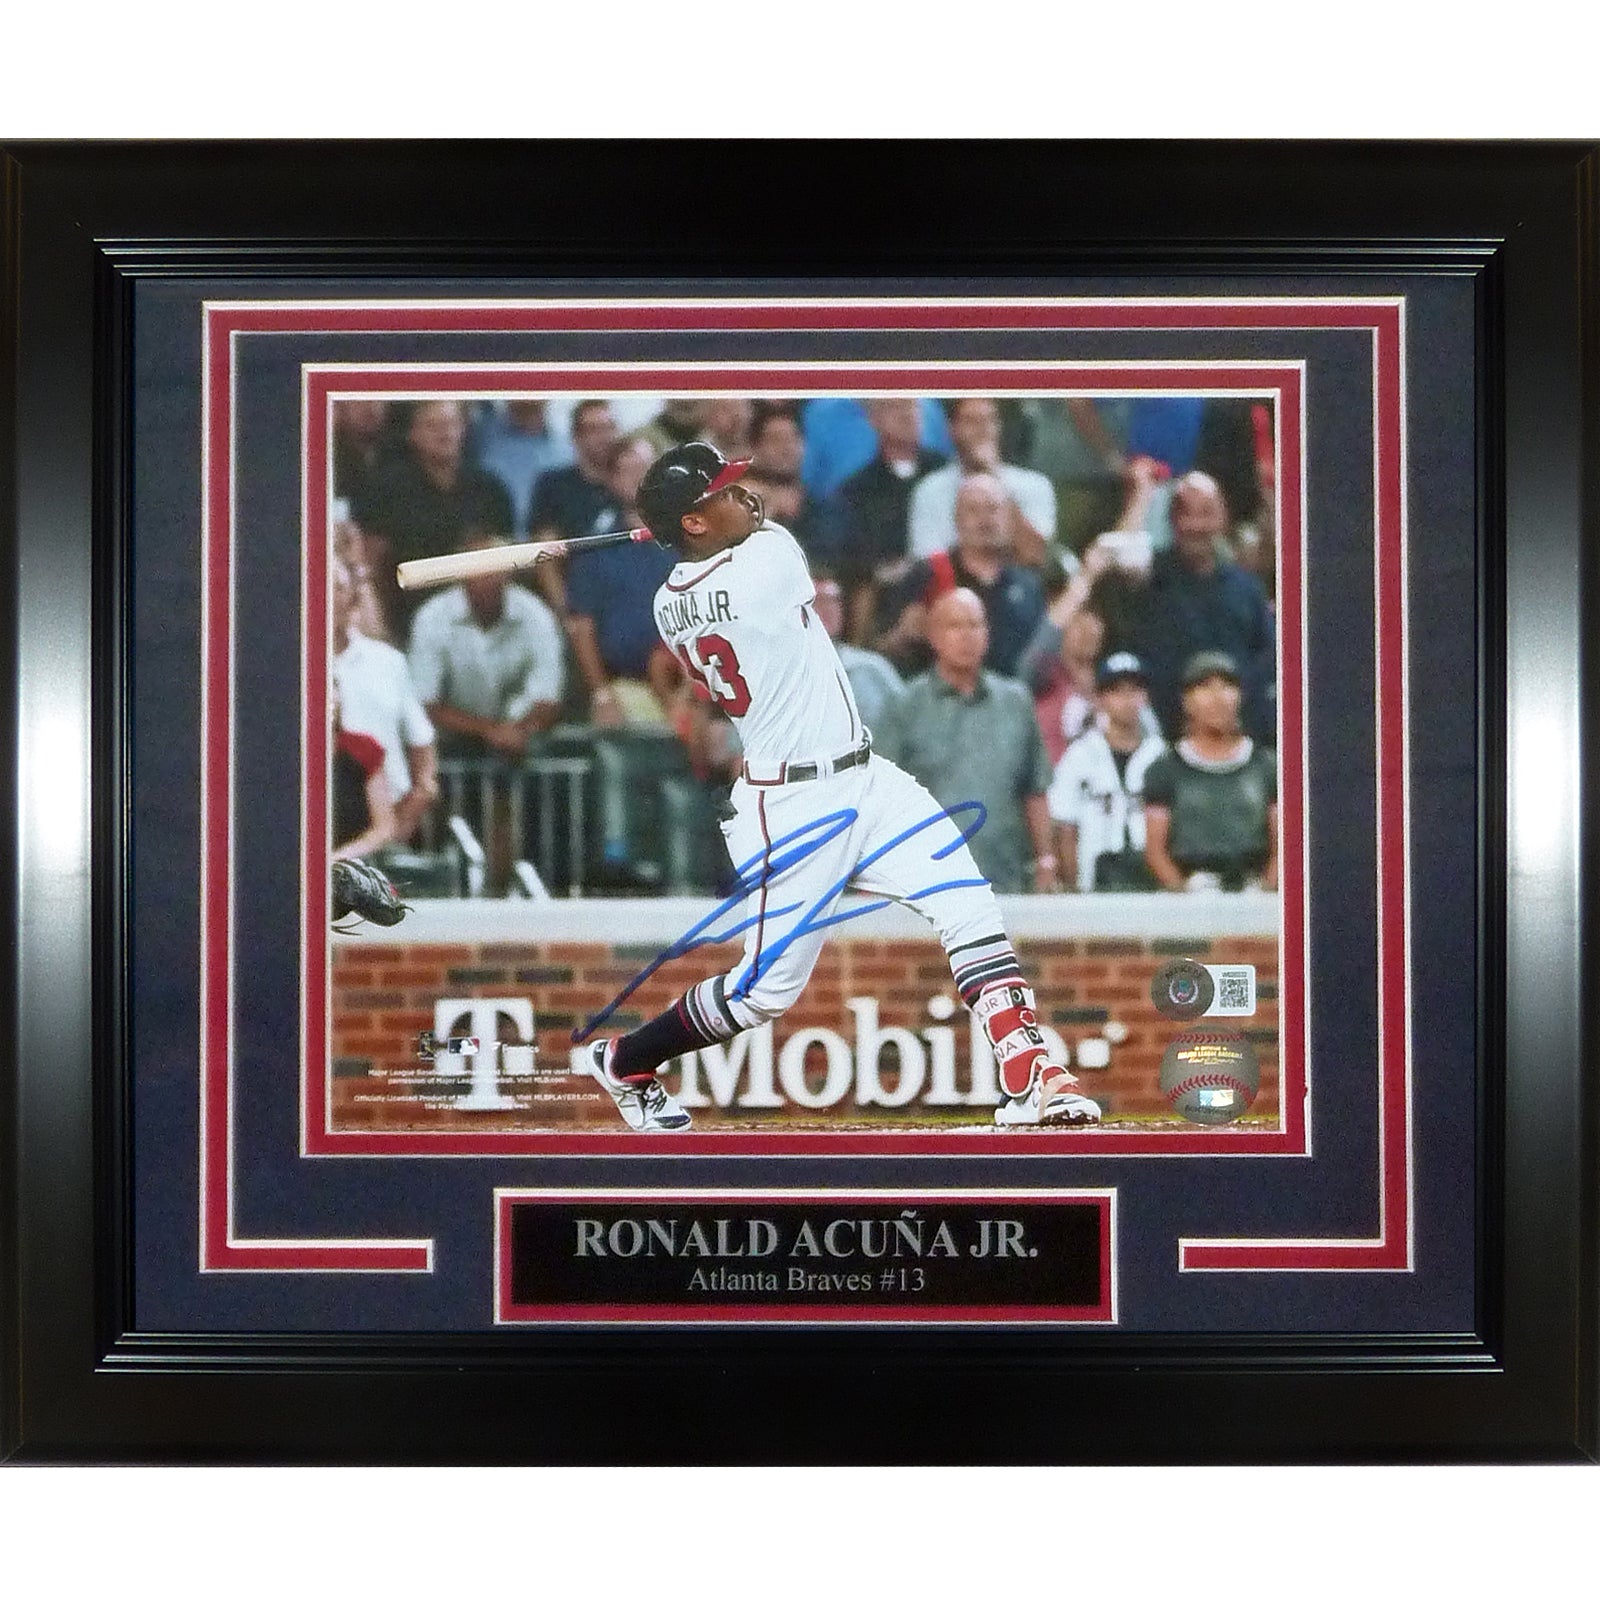 Ronald Acuna Jr. Autographed Atlanta Braves (Batting) Framed 8x10 Photo - Beckett